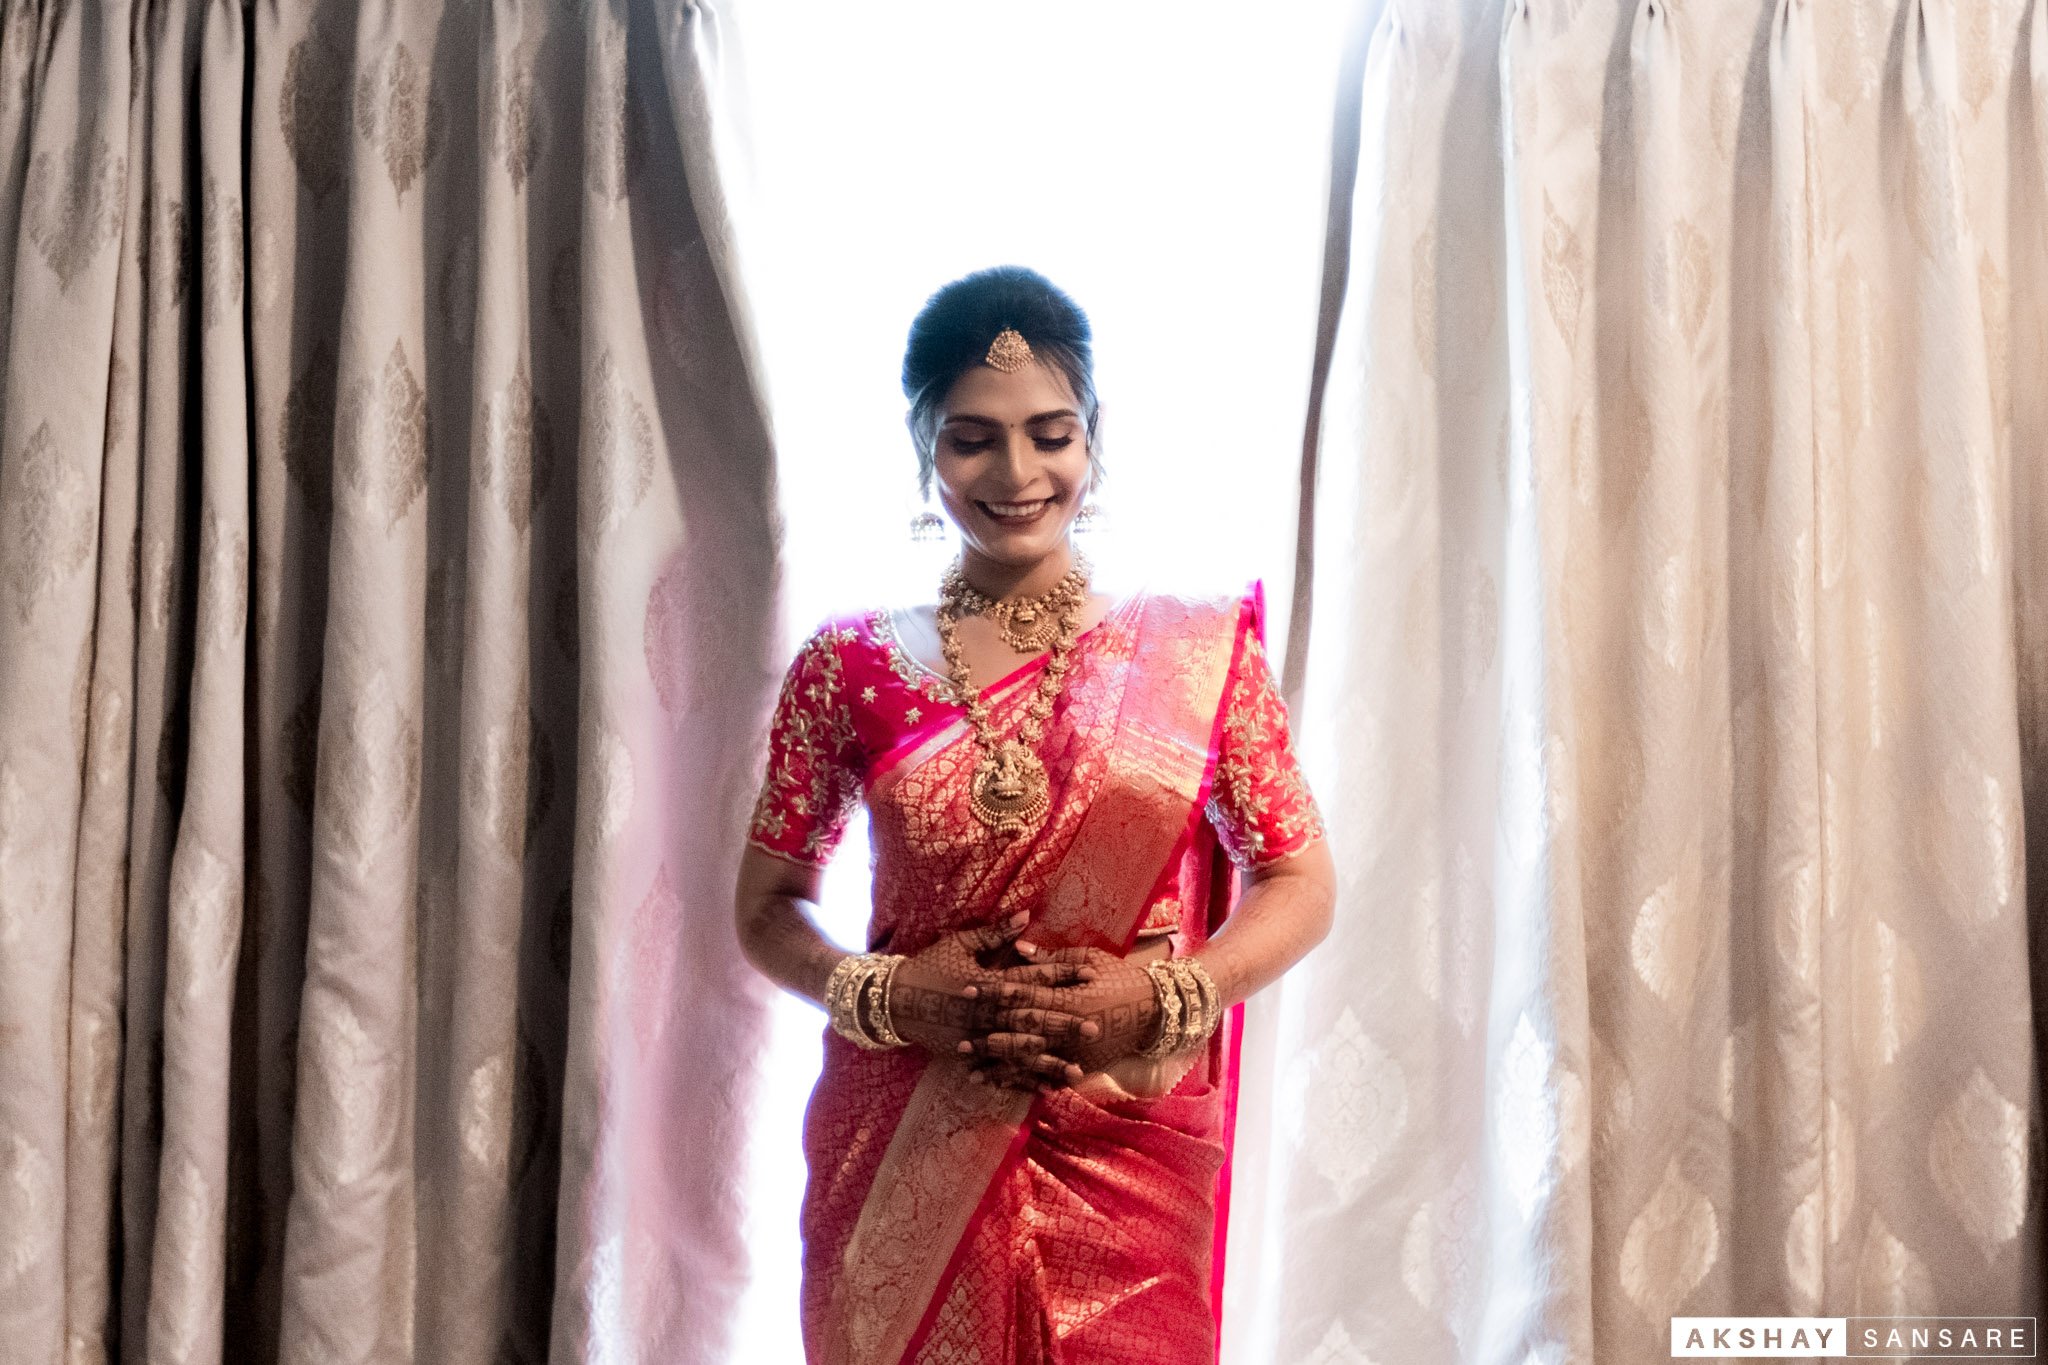 Lipika x Bhavya Compress Akshay Sansare Photography & Films Best wedding photographers in mumbai india-36.jpg